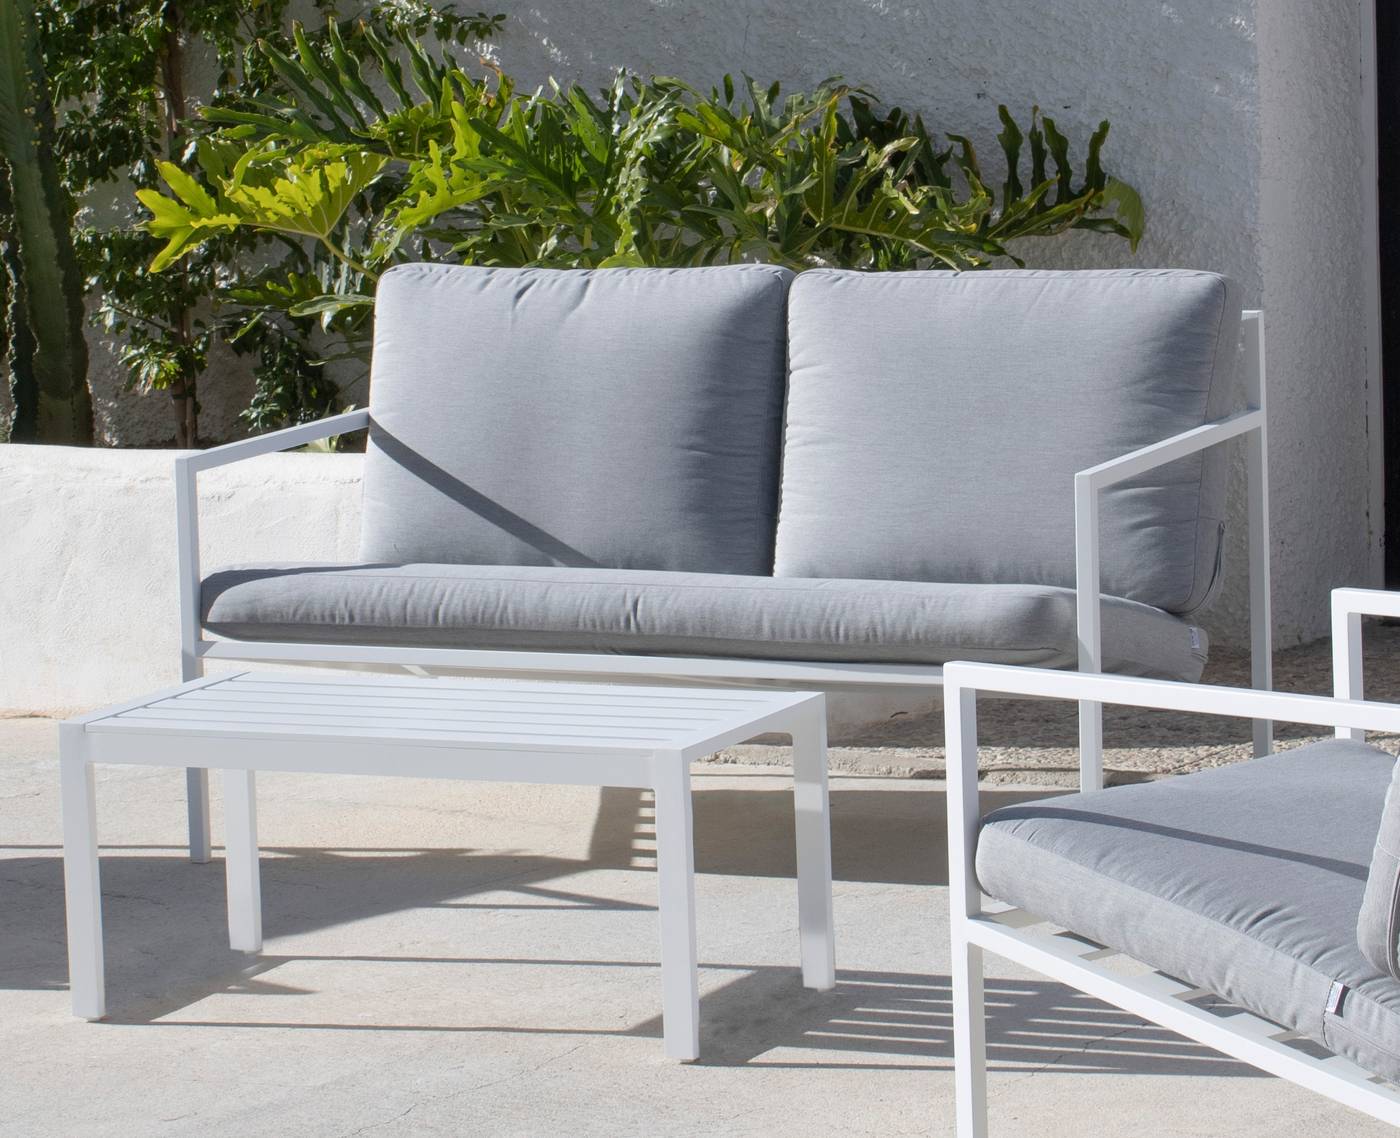 Set Aluminio Capri-7 - Conjunto aluminio: sofá 2 plazas + 2 sillones + 1 mesa de centro. Estructura color blanco o antracita.